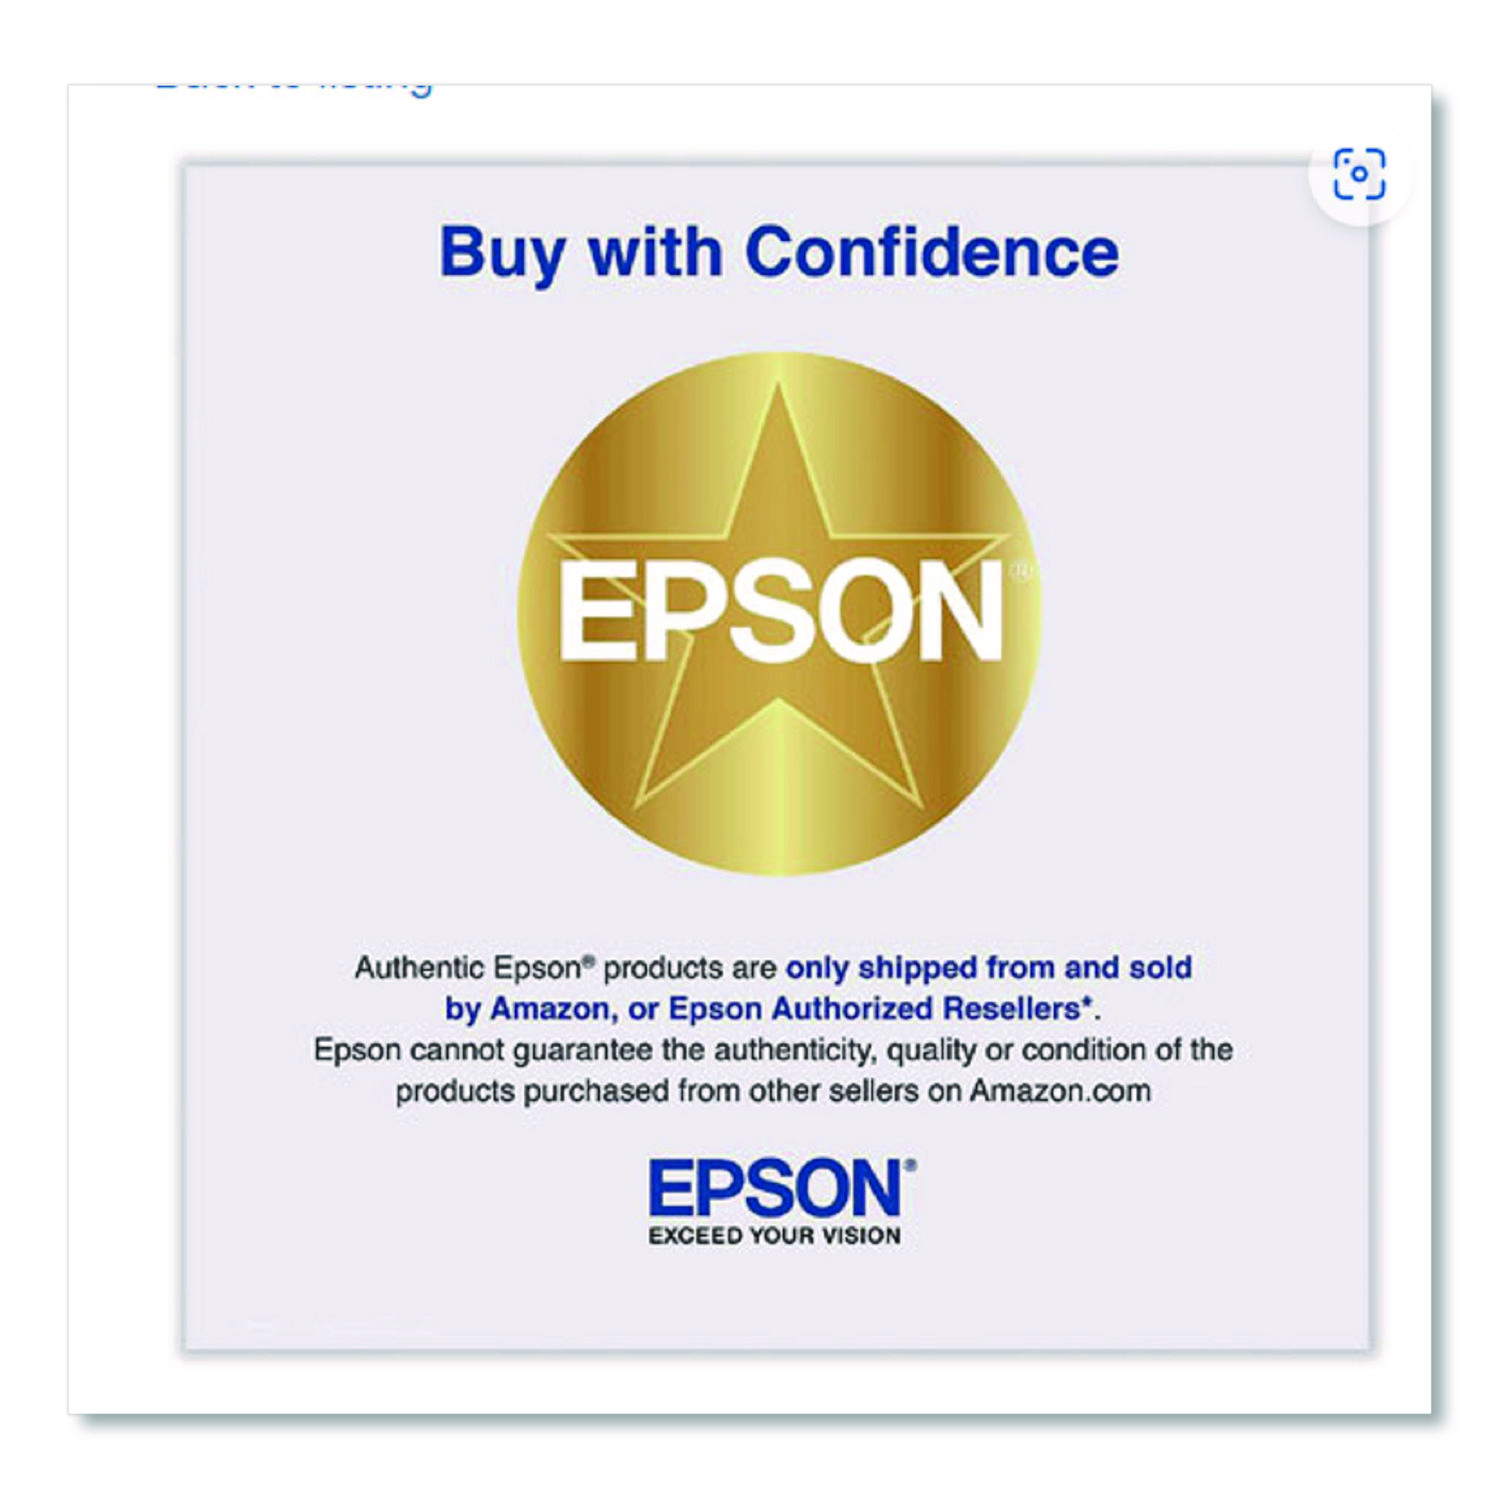 Epson Photo Quality Self-Adhesive Sheets S041106 B&H Photo Video